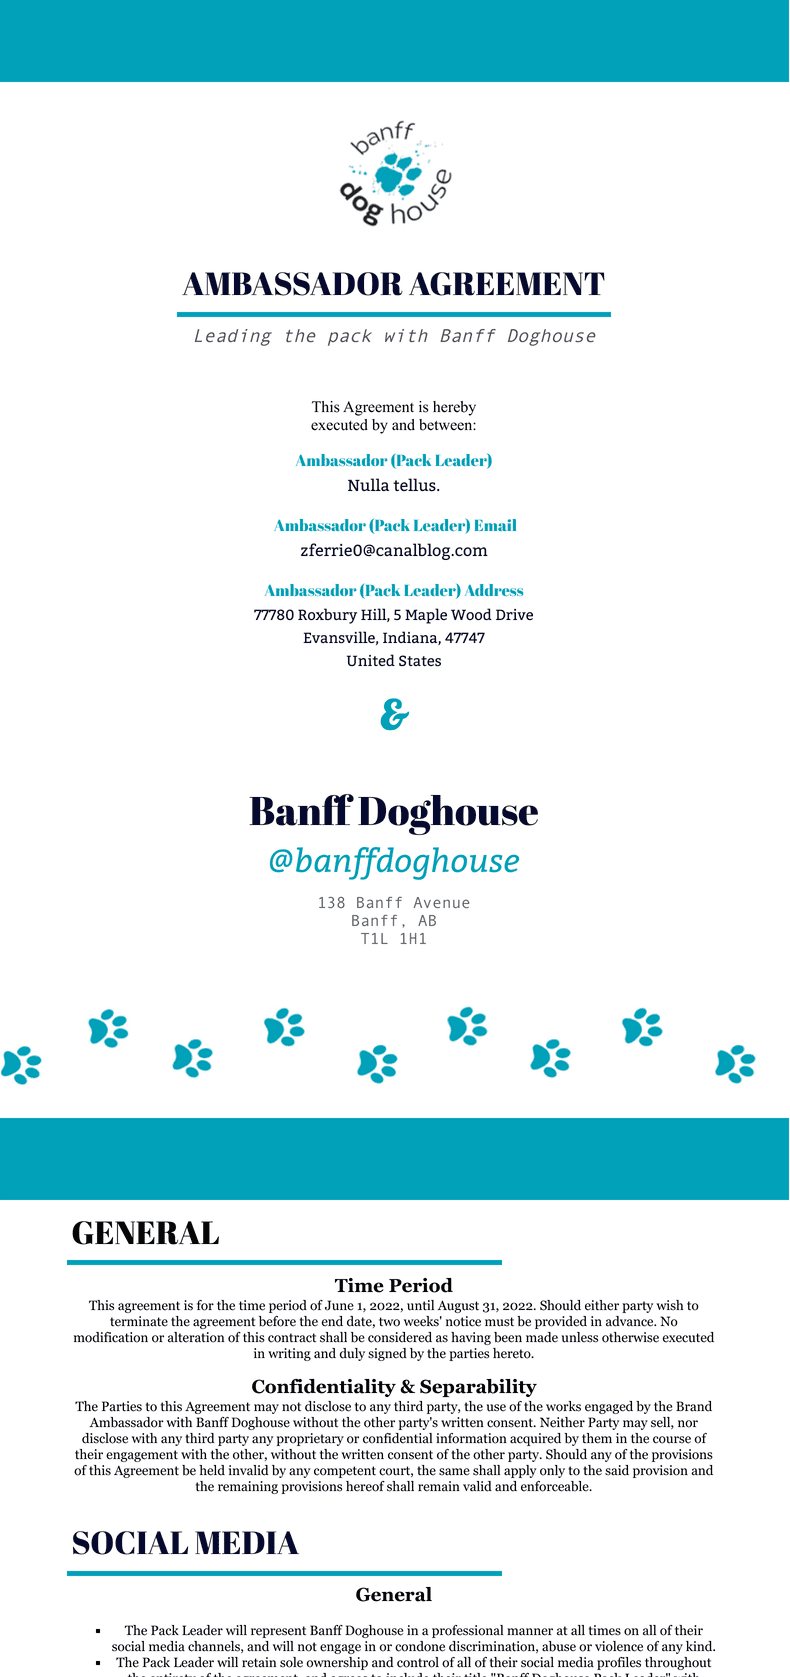 NAC - Banff Doghouse - Pack Leader Agreement